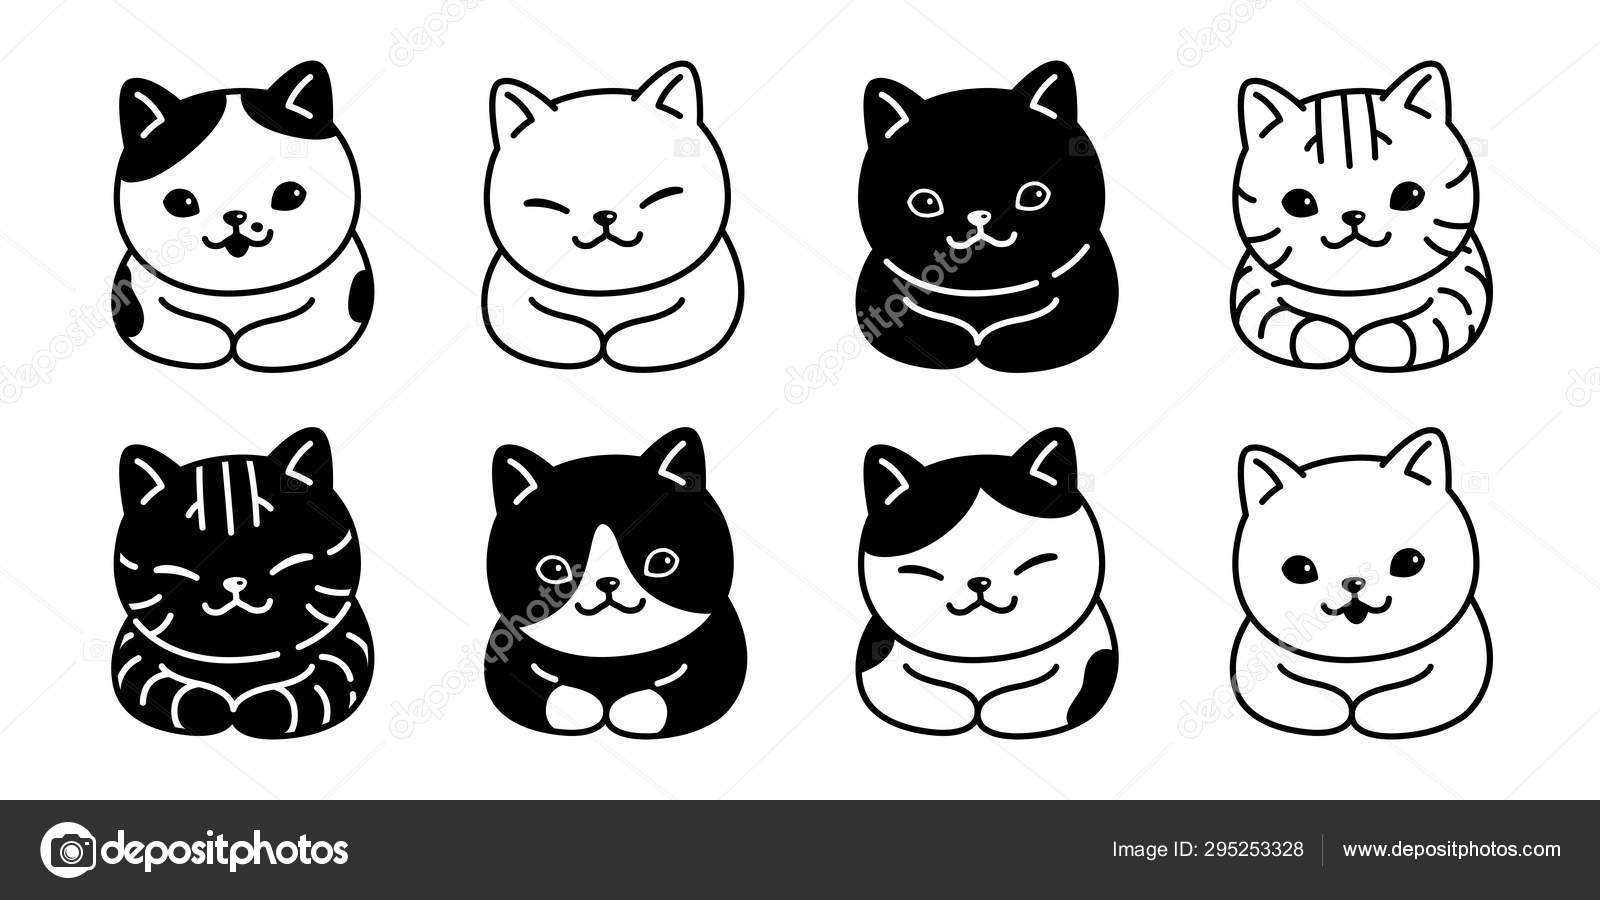 Calico cat Vector Art Stock Images | Depositphotos